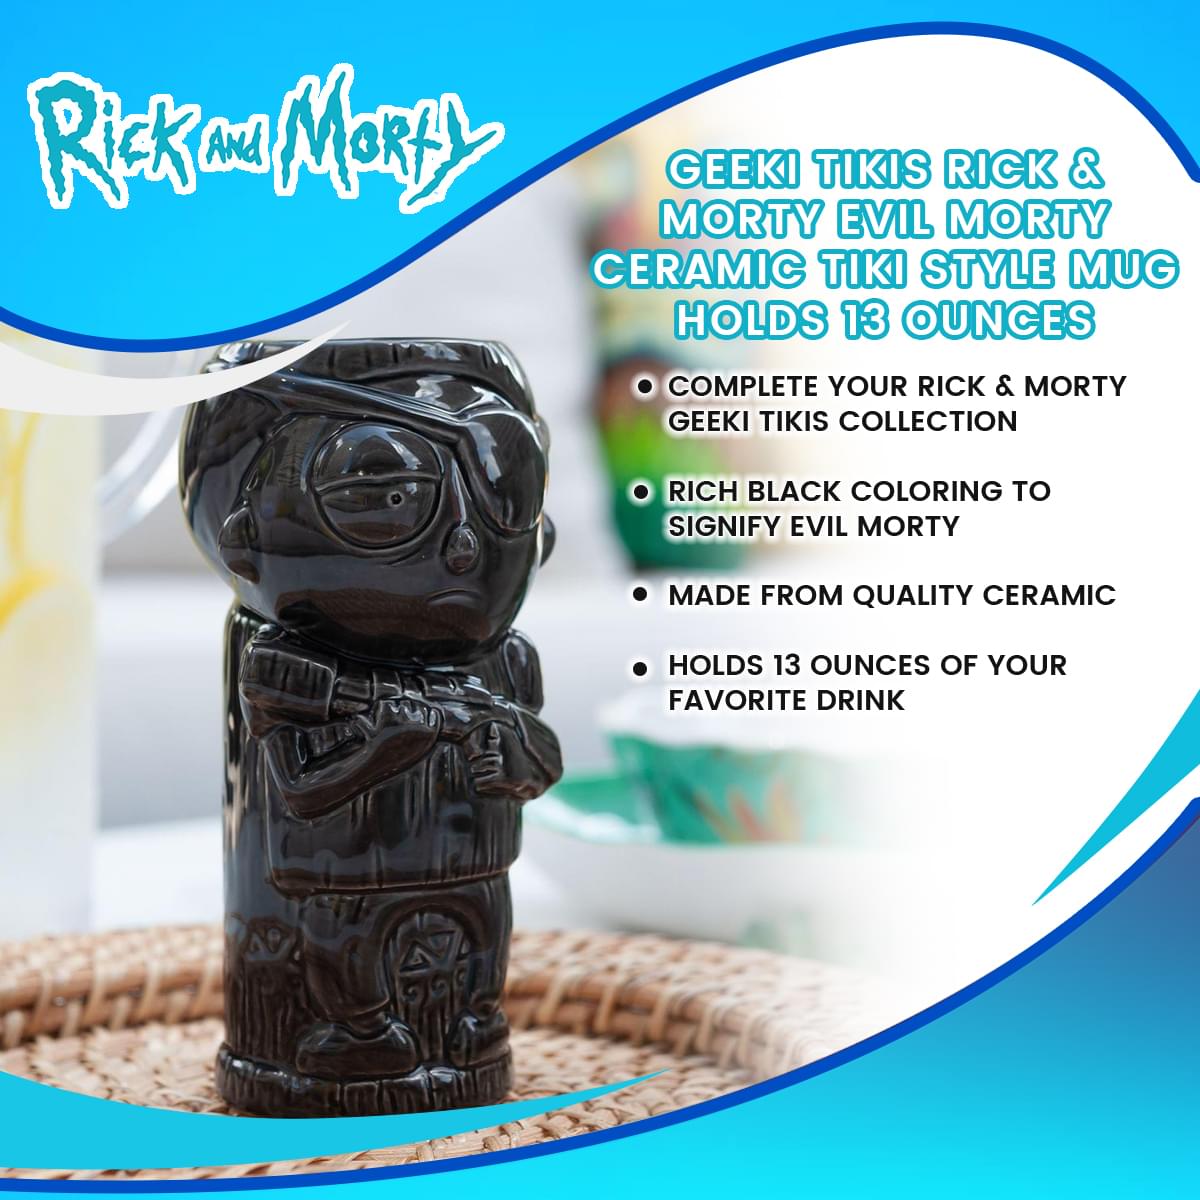 Geeki Tikis Rick & Morty Evil Morty | Ceramic Tiki Style Mug | Holds 13 Ounces